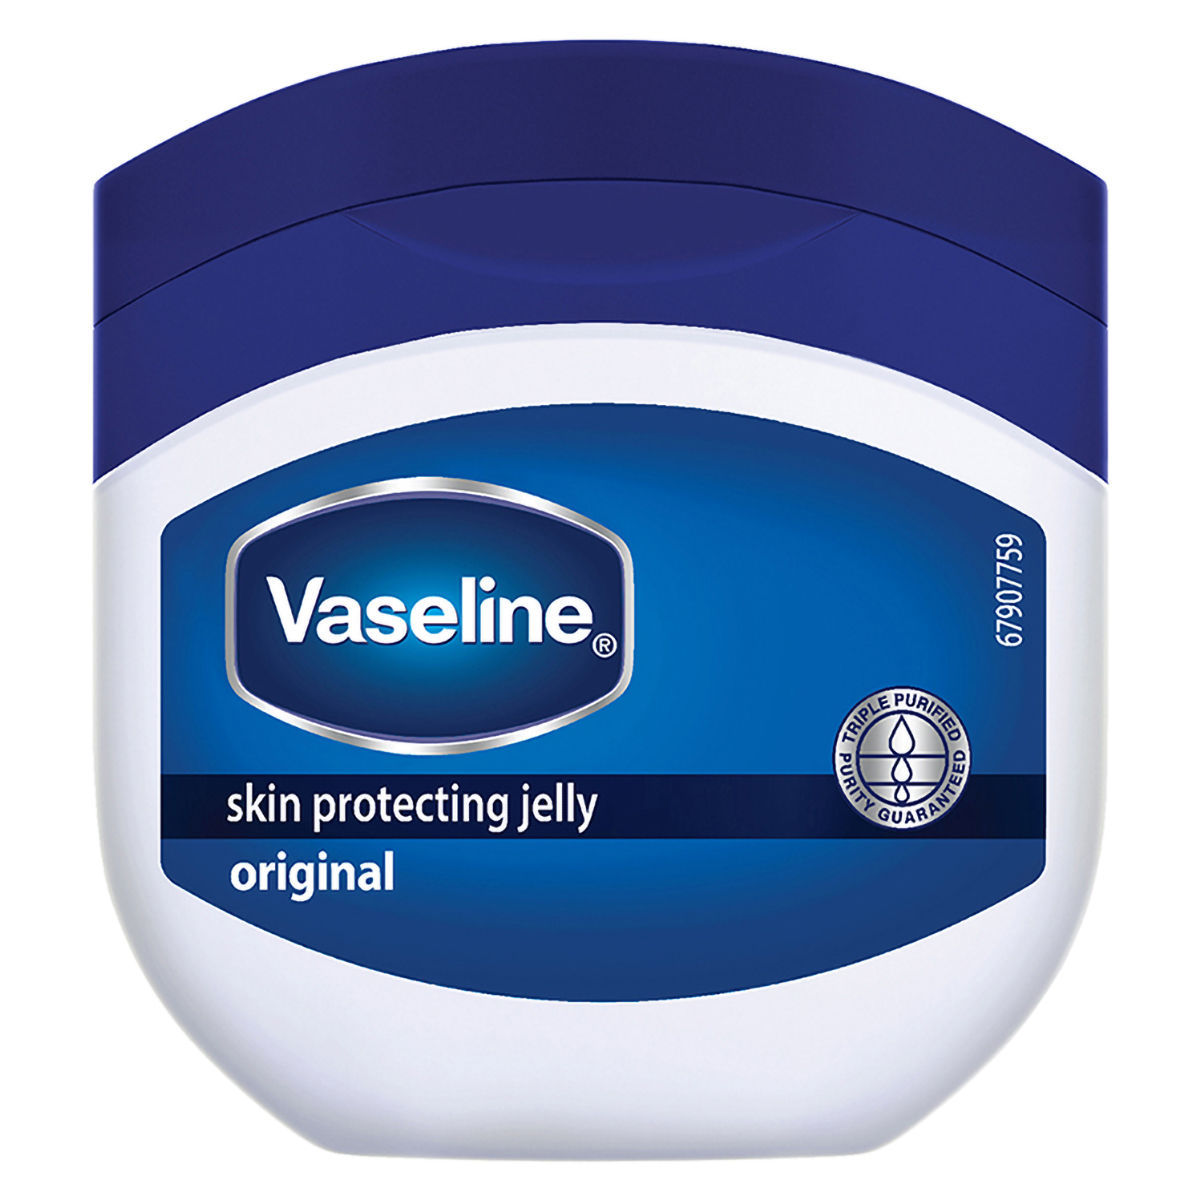 Buy Vaseline Original Pure Skin Jelly, 21 gm Online